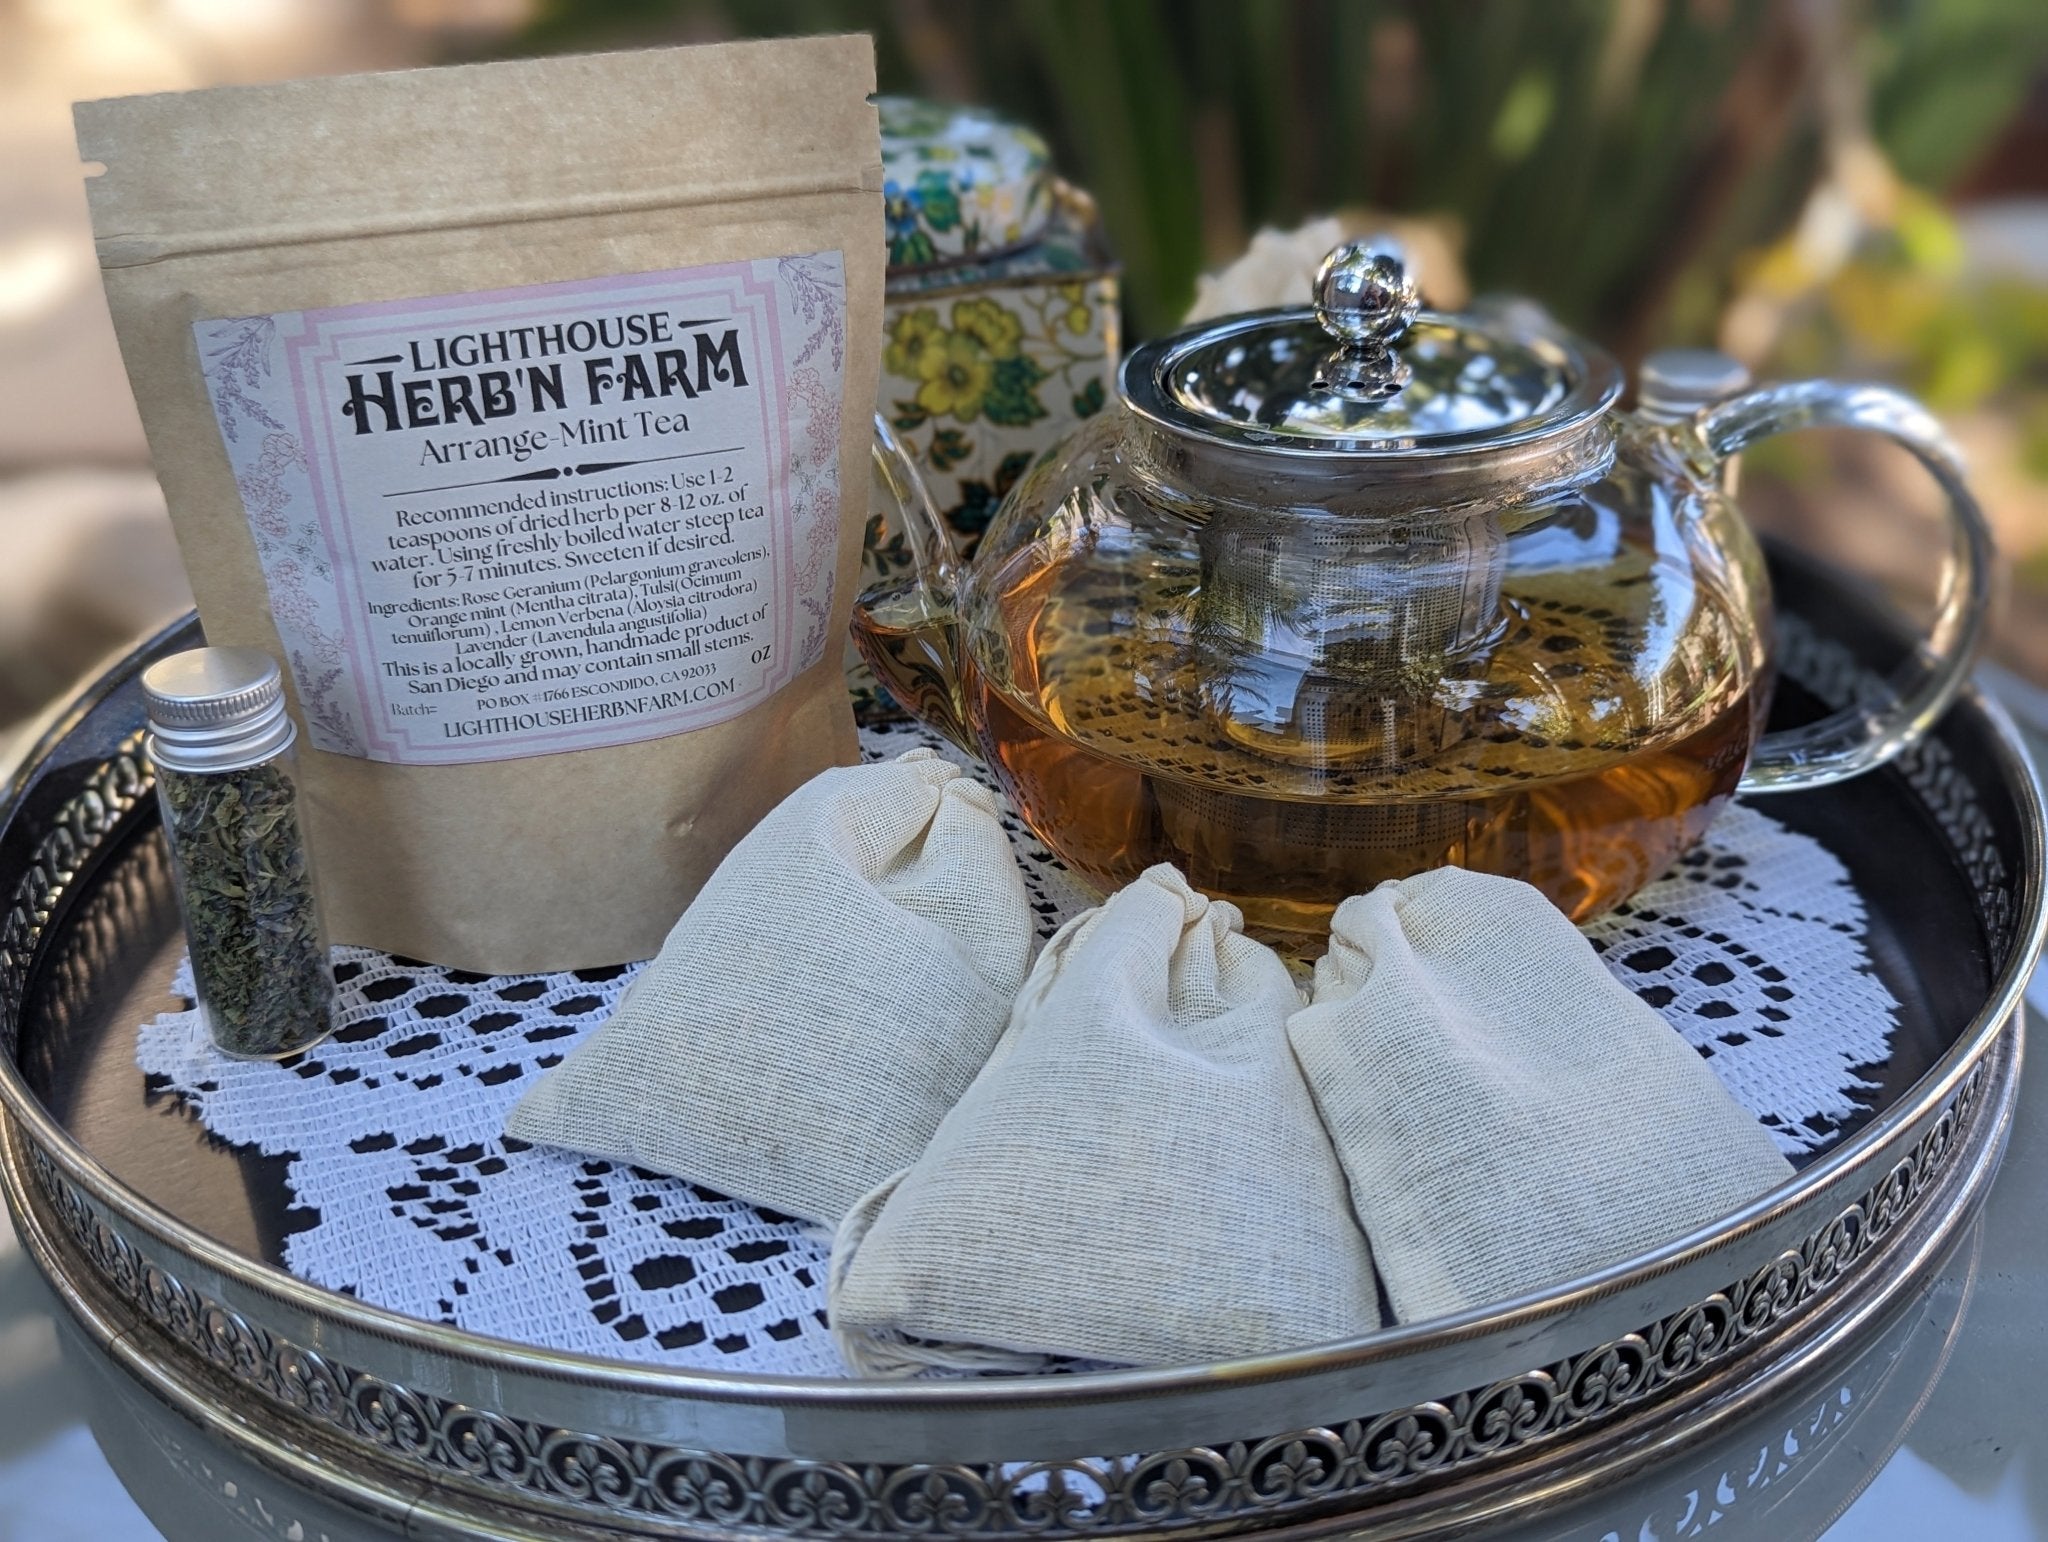 Arrange-Mint Tea - Lighthouse Herb'n Farm